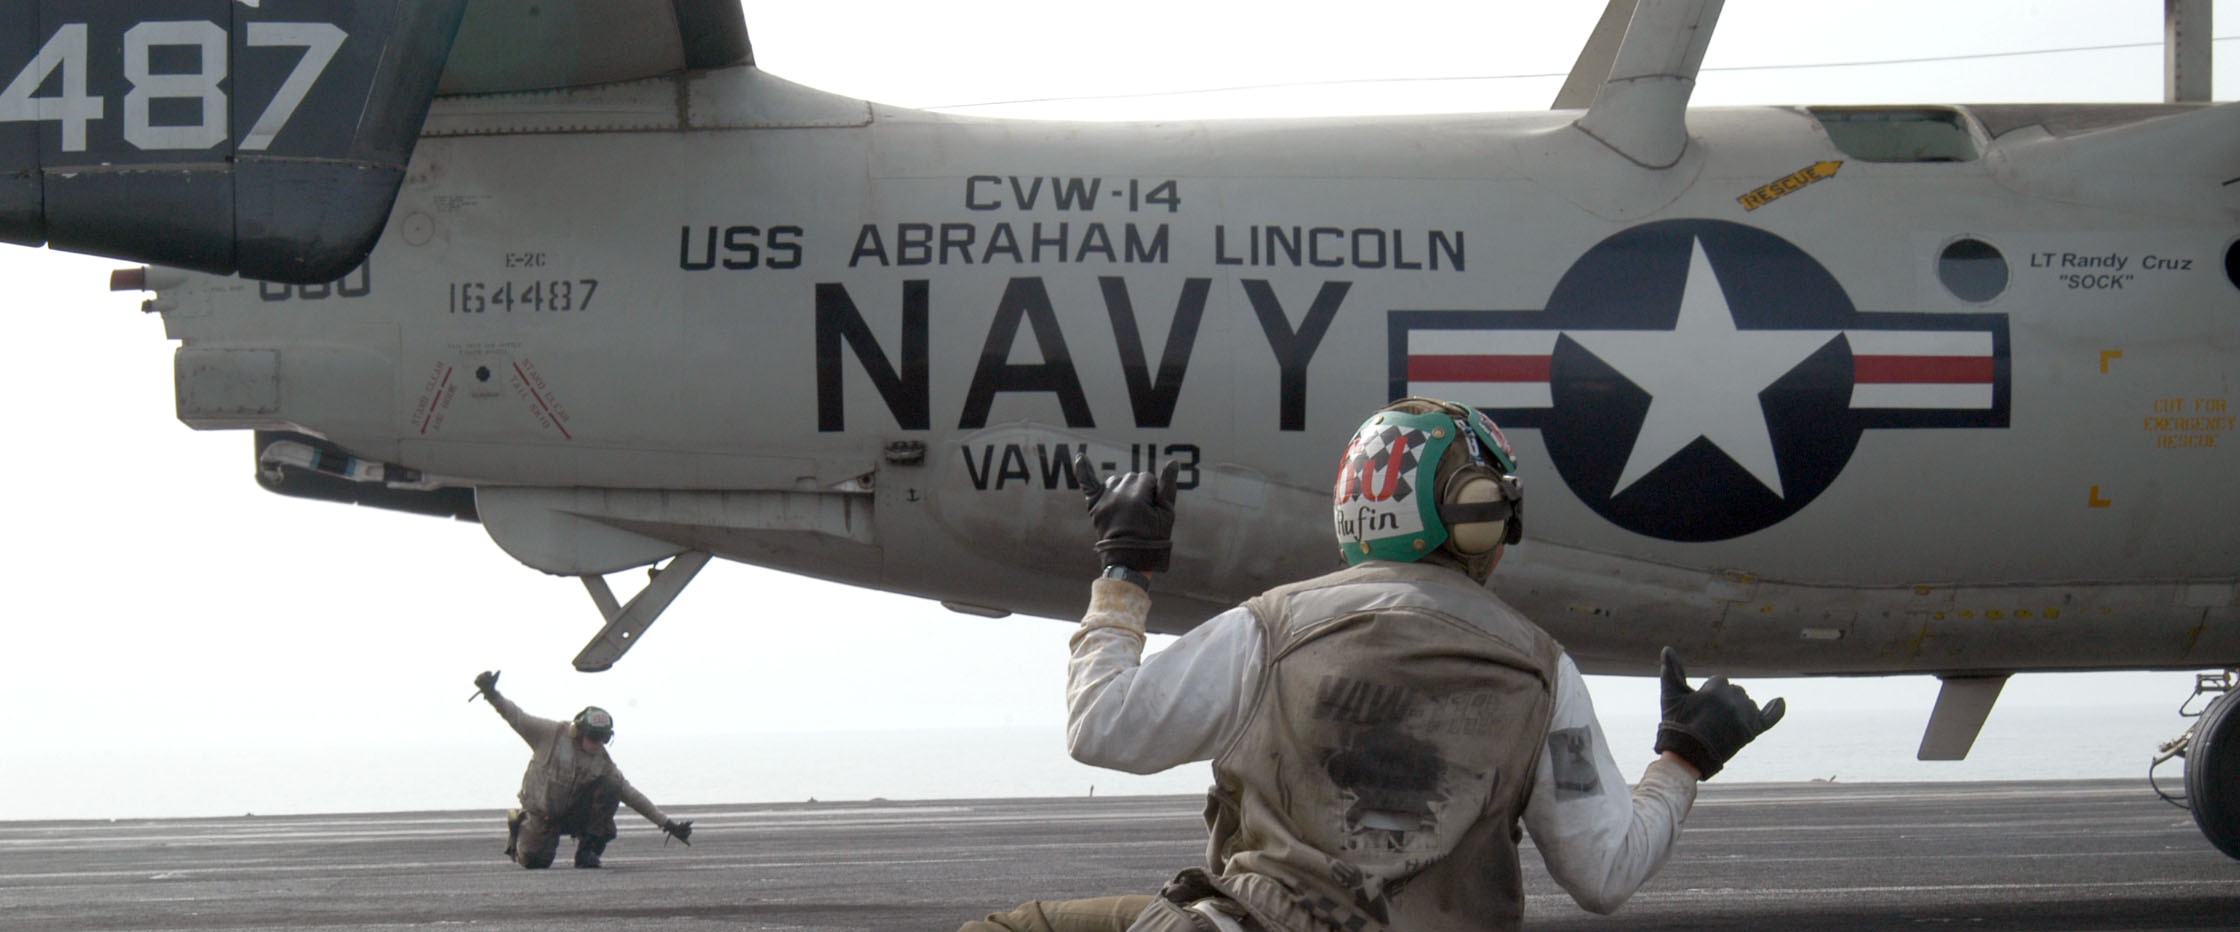 vaw-113 black eagles carrier airborne early warning squadron us navy grumman e-2c hawkeye cvw-14 uss abraham lincoln cvn-72 85